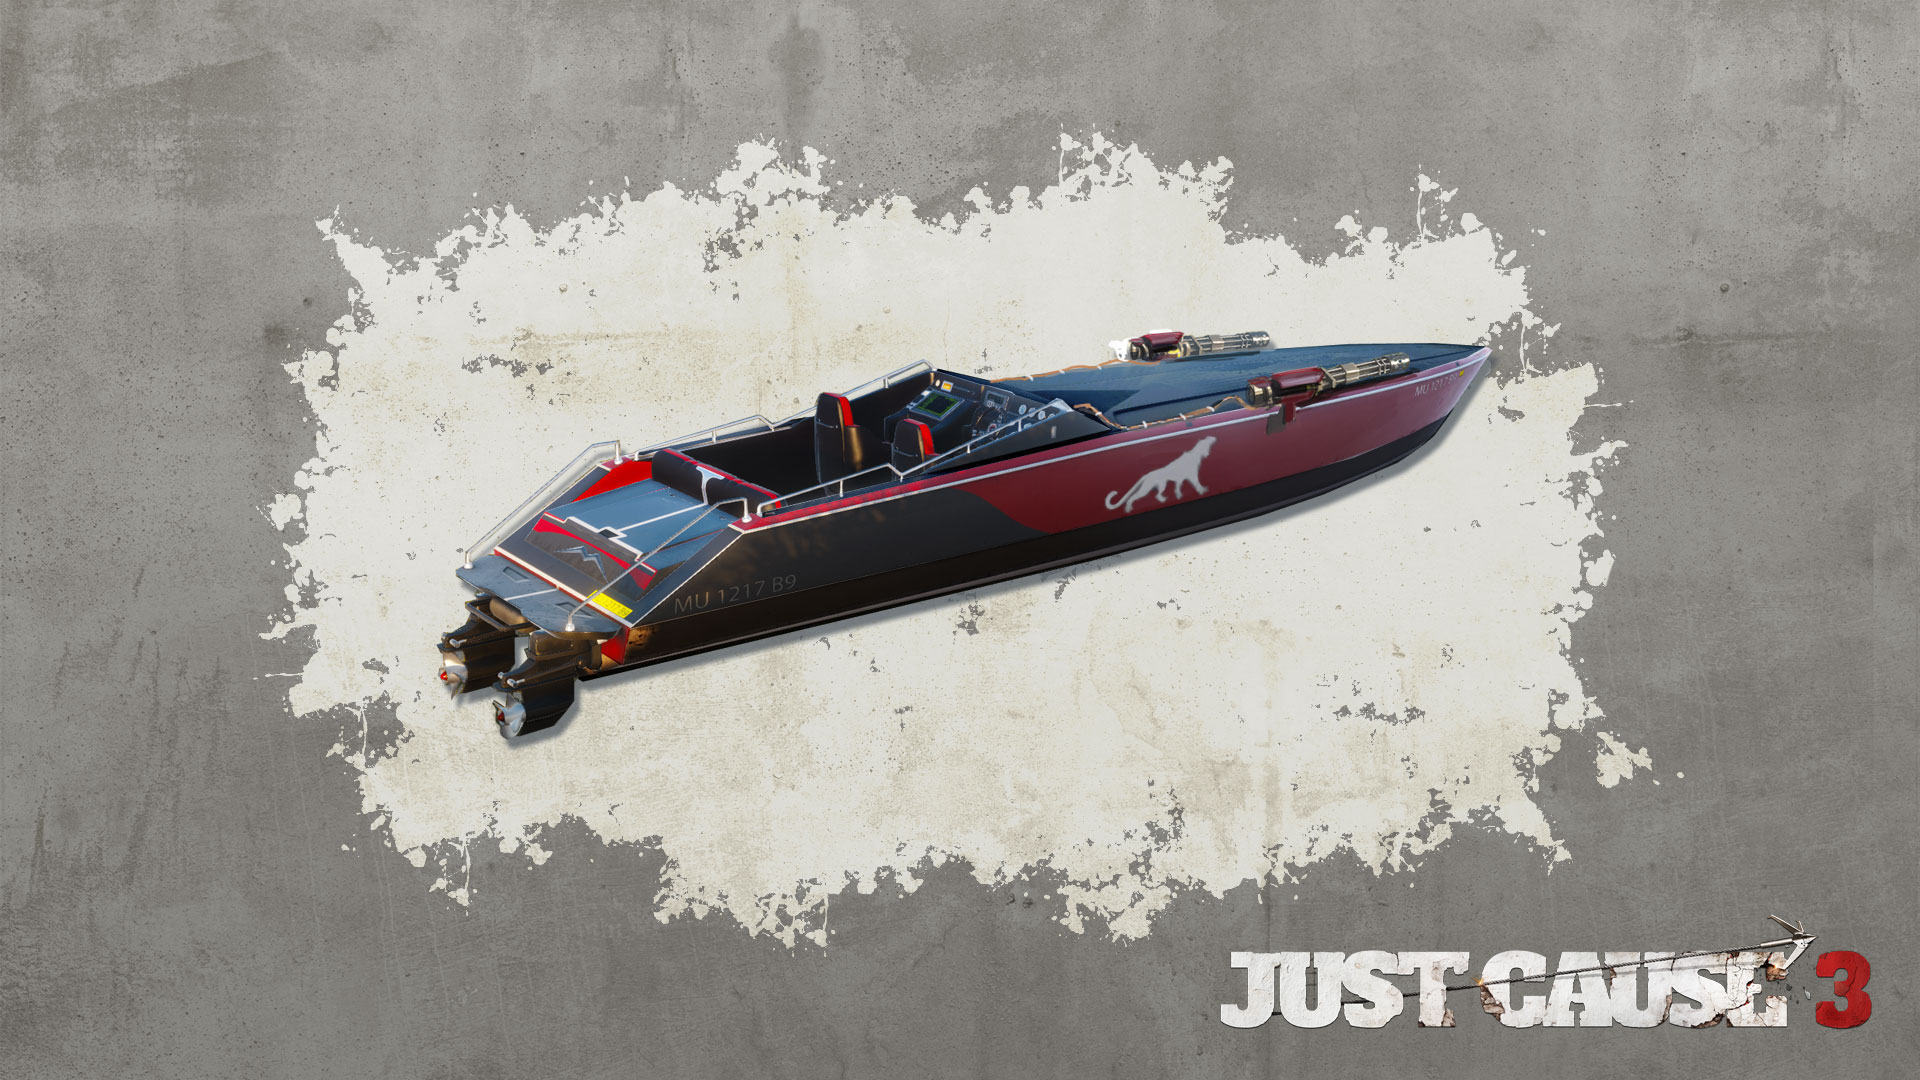 Just Cause 3 - Mini-Gun Racing Boat DLC Steam CD Key 1.56$